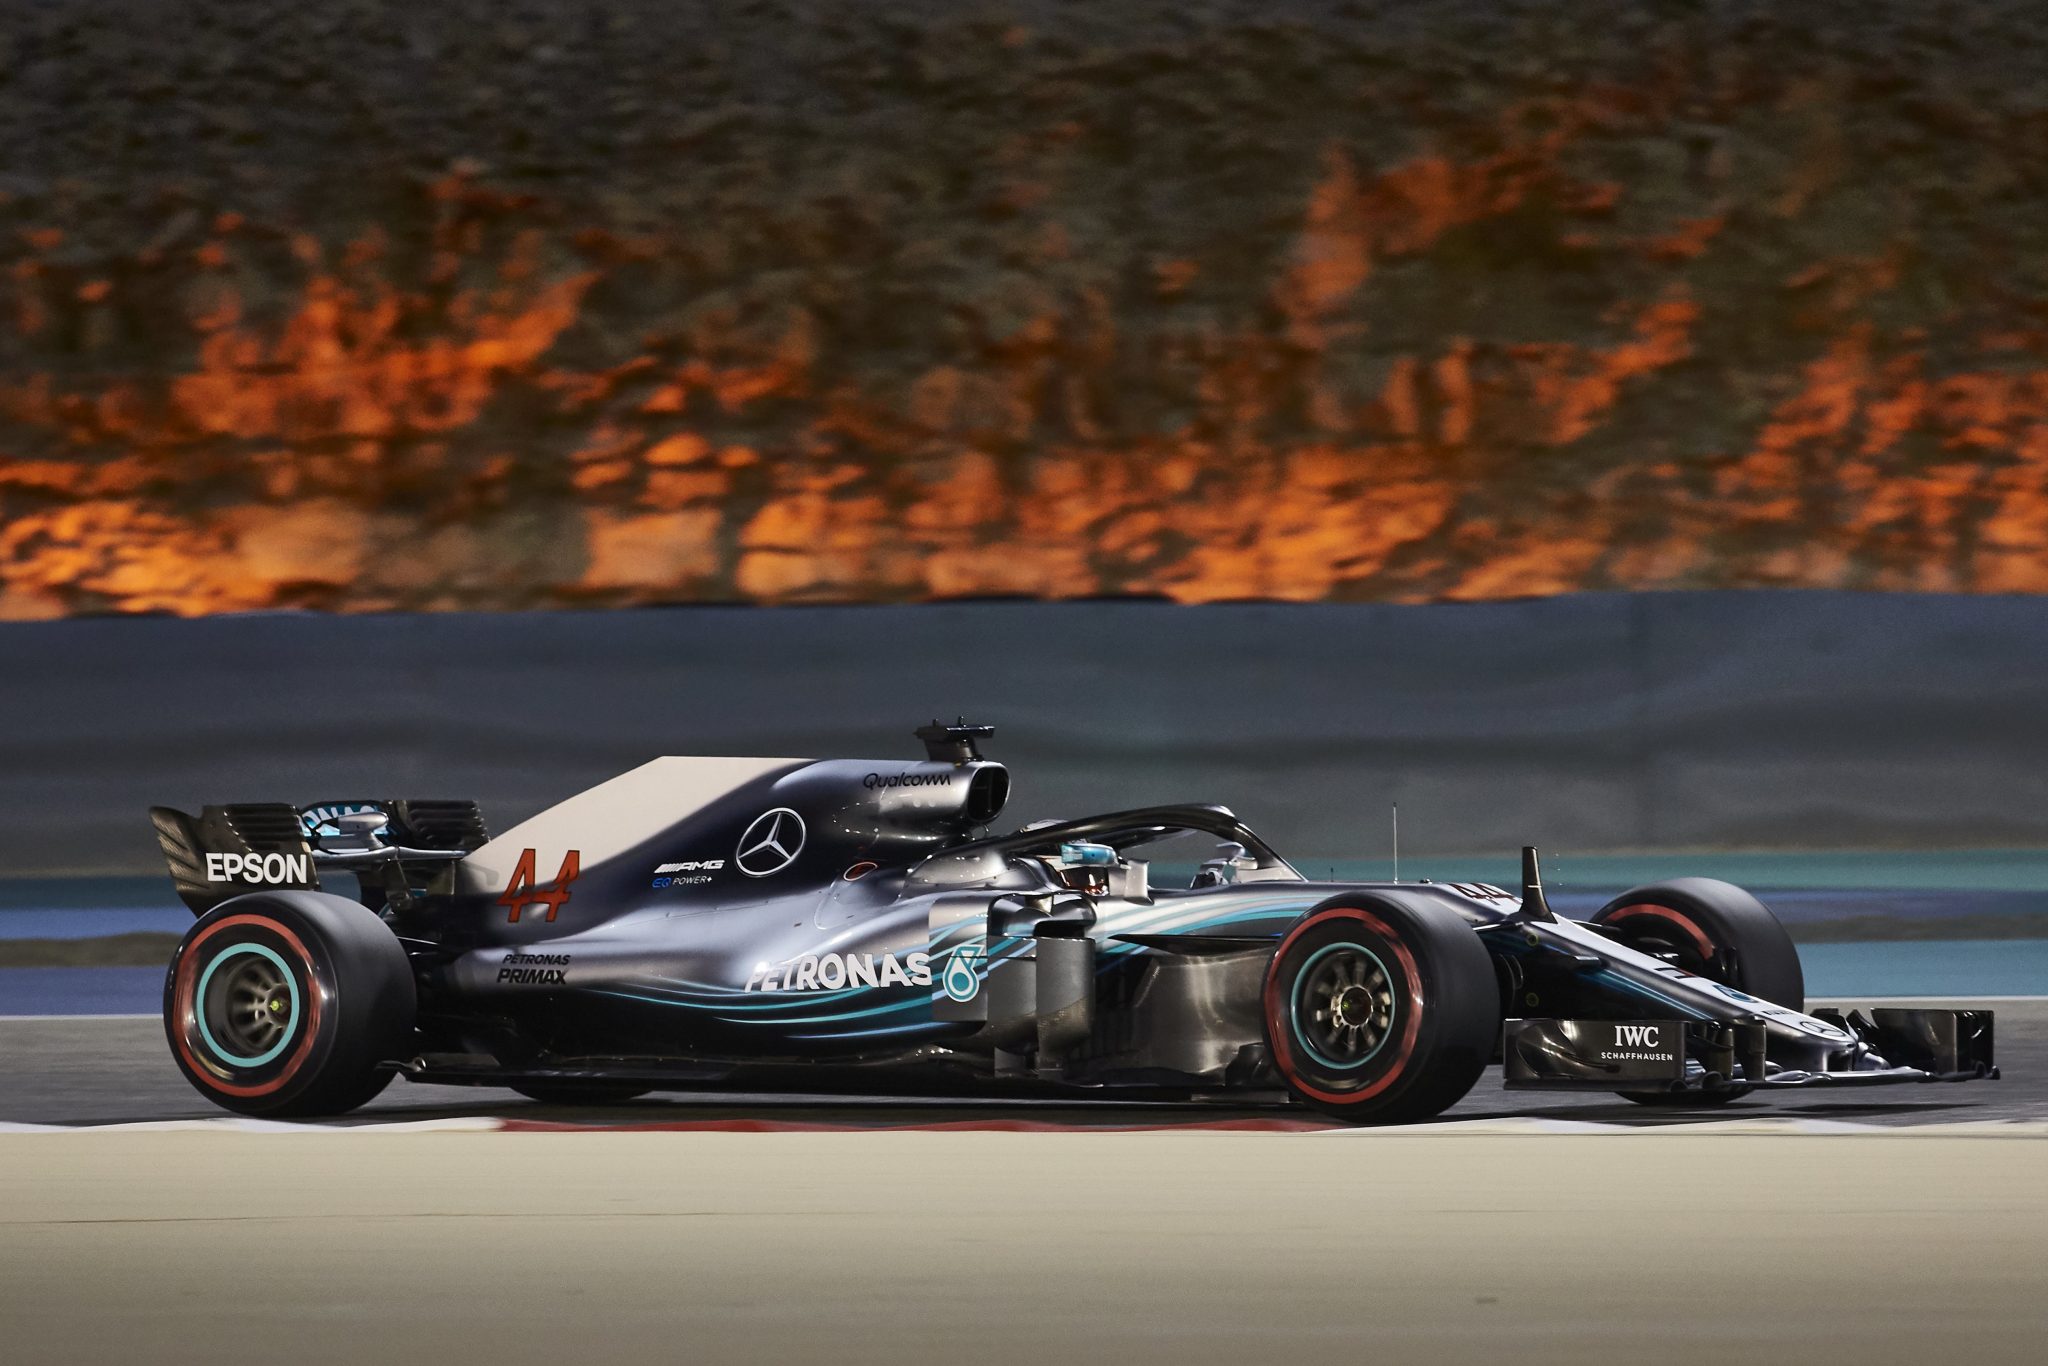 Lewis Hamilton - Bahrain Grand Prix 2018 - Mercedes 2018